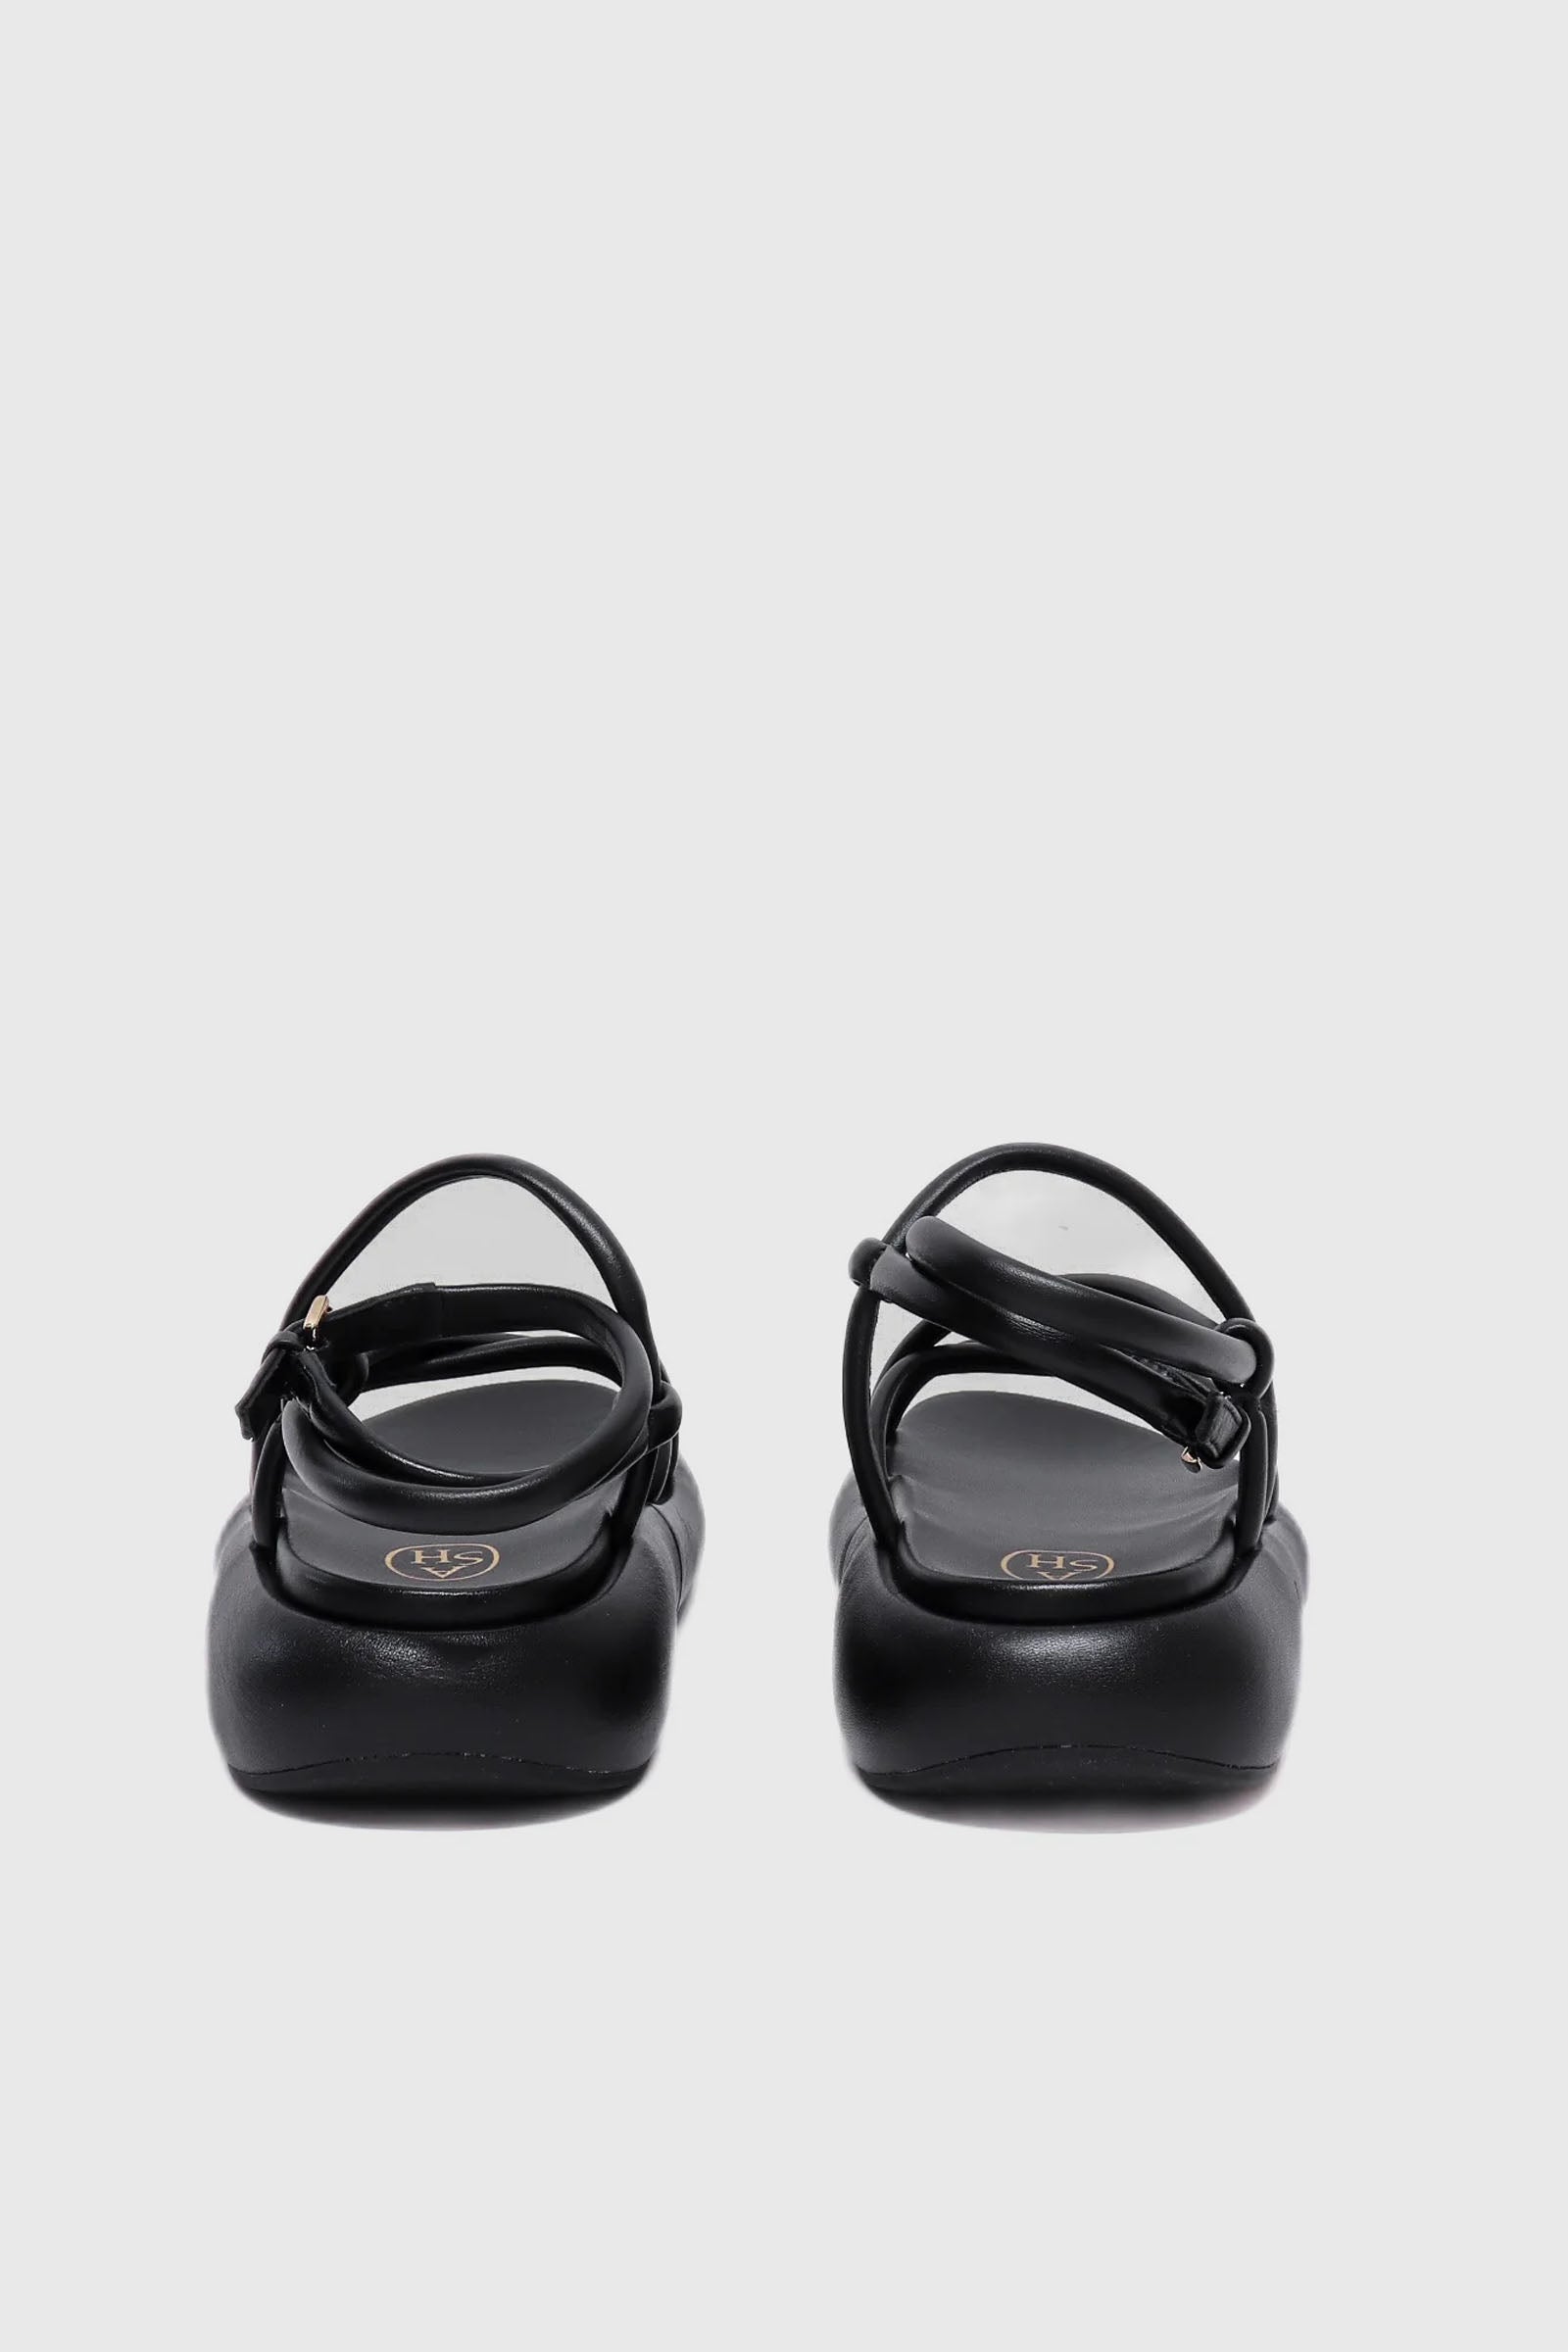 Ash Vice Leather Black Sandal - 3